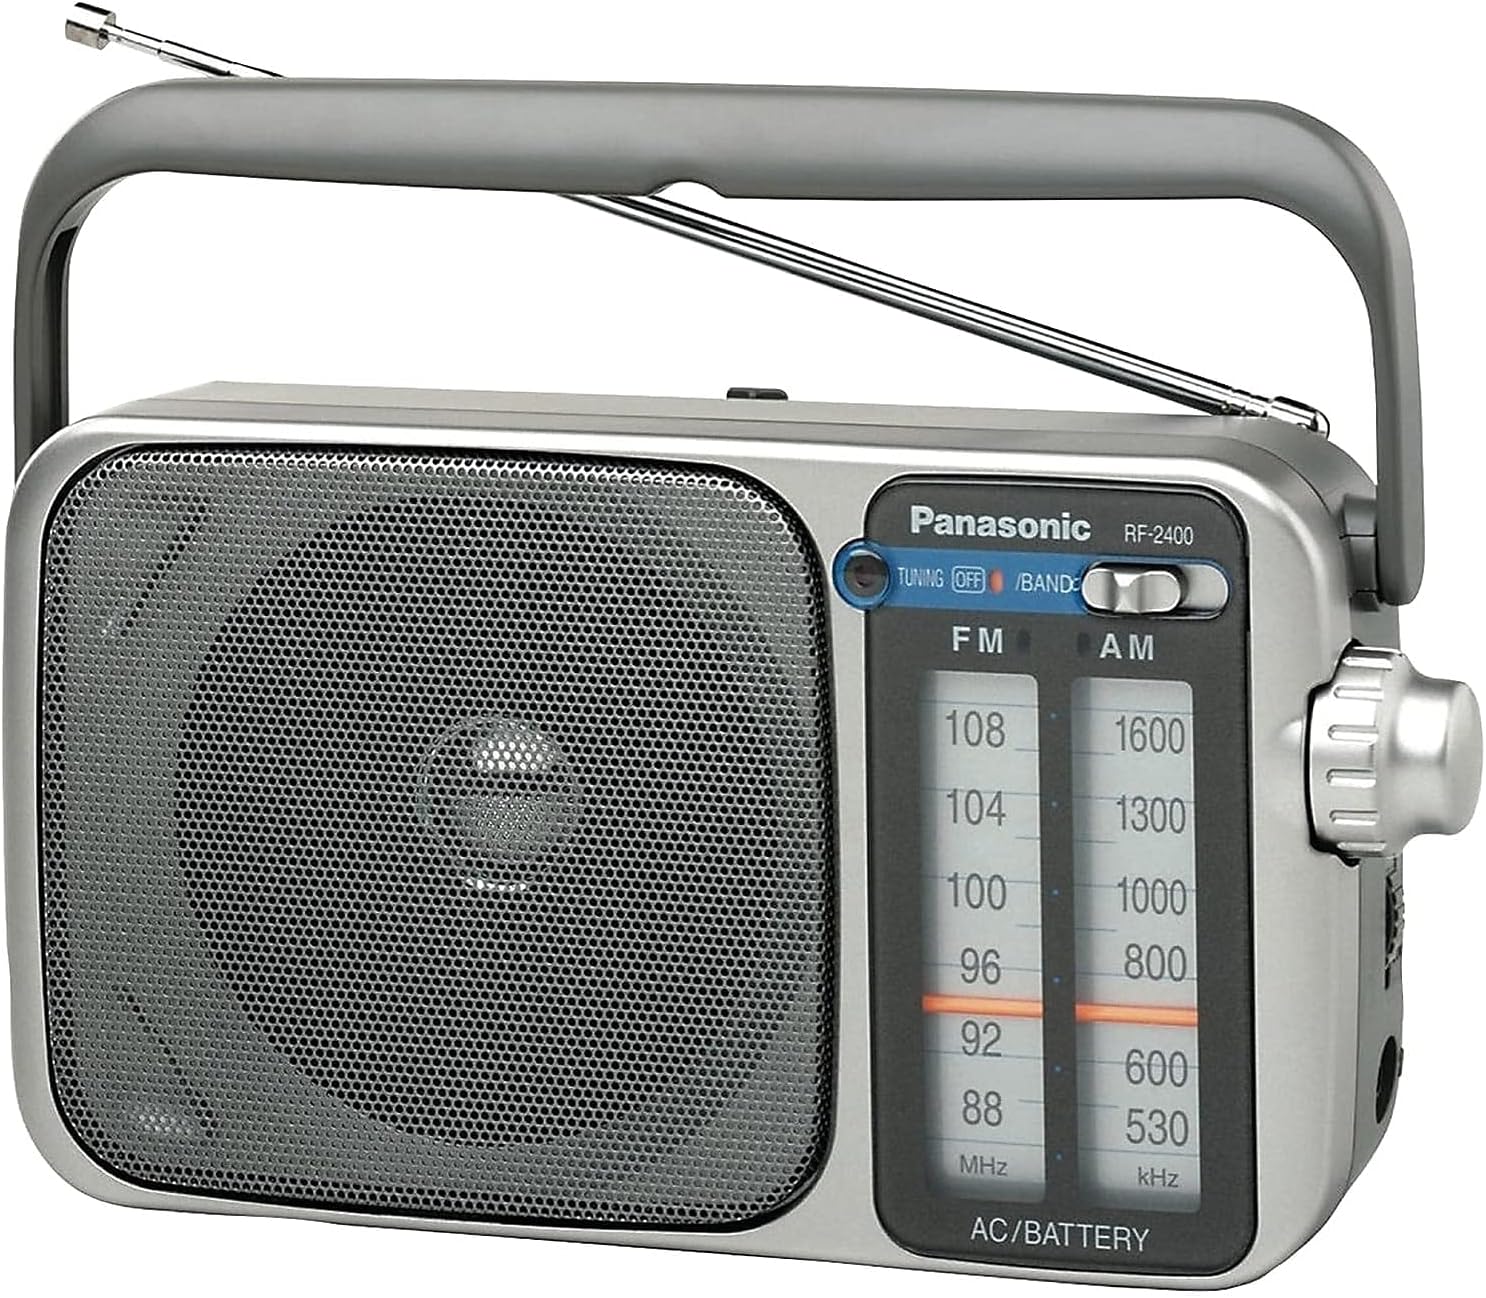 Panasonic Portable AM / FM Radio